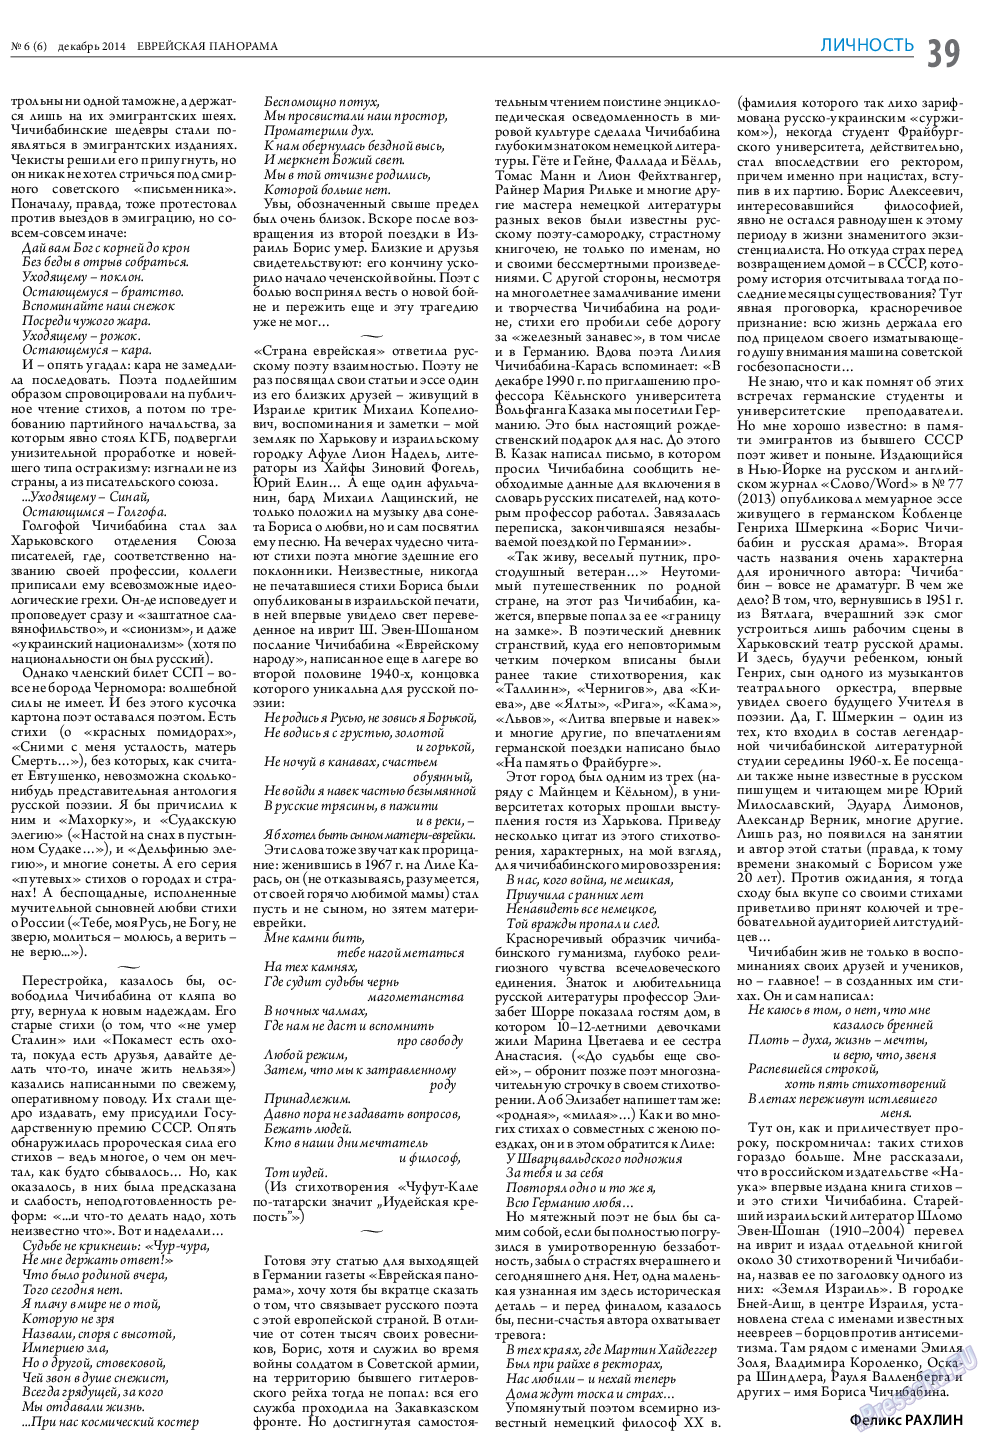 Еврейская панорама, газета. 2014 №6 стр.39